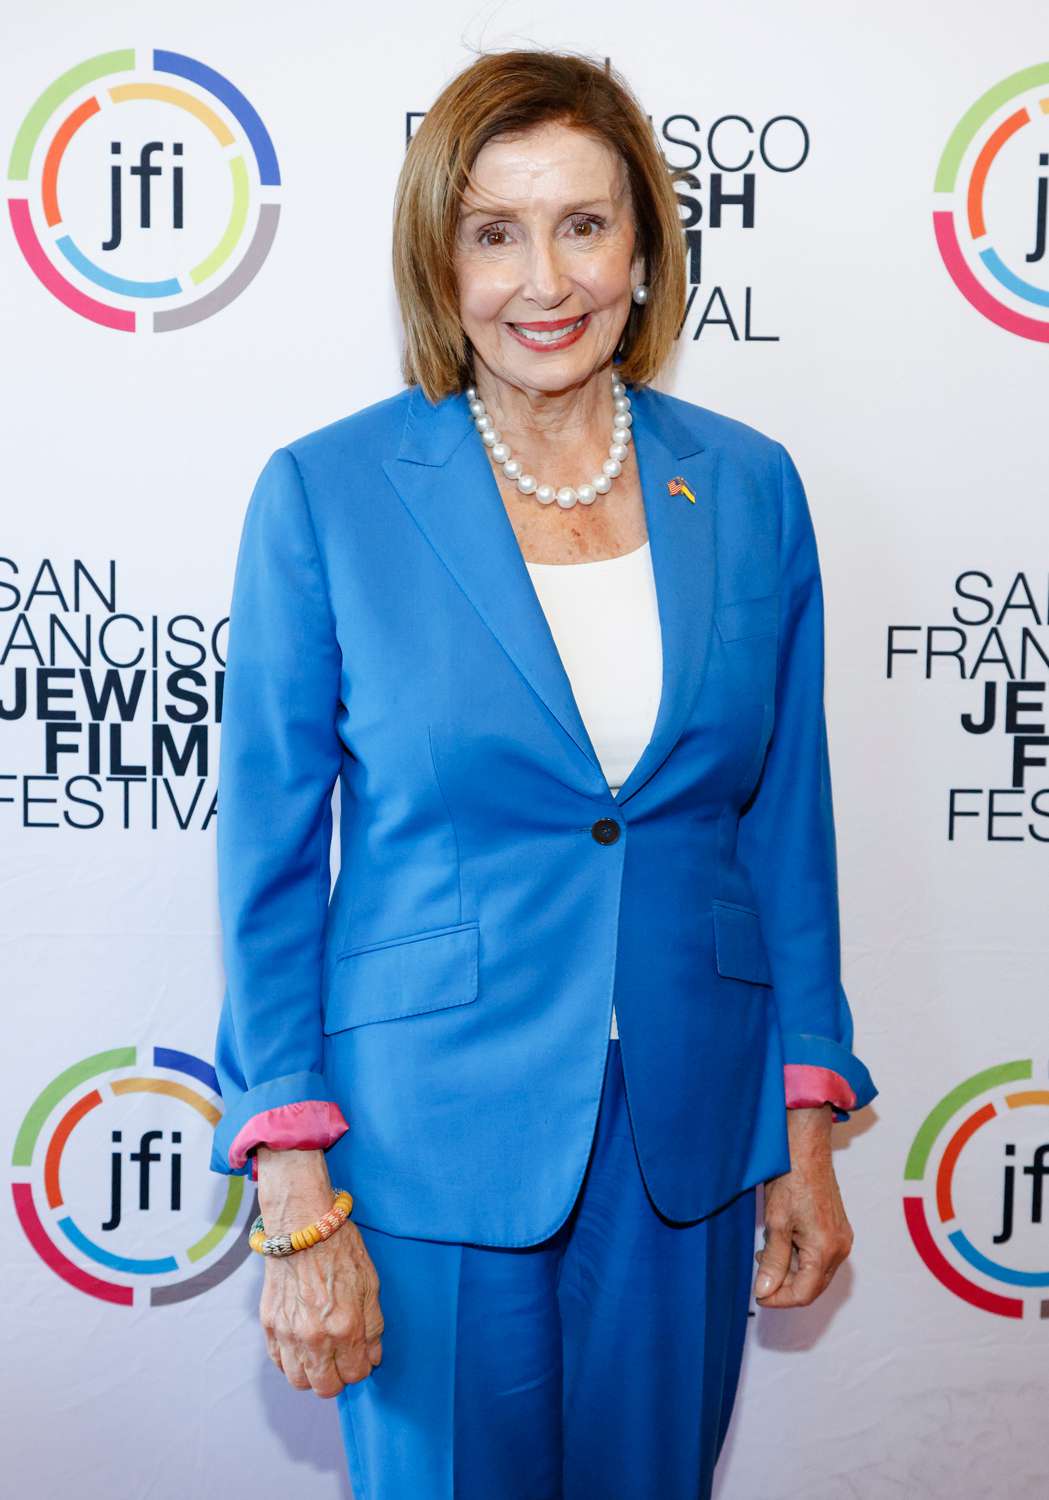 United States Representative Nancy Pelosi attends the closing night premiere of "Bella!" at the 2023 San Francisco Jewish Film Festival at the Castro Theatre on July 30, 2023 in San Francisco, California